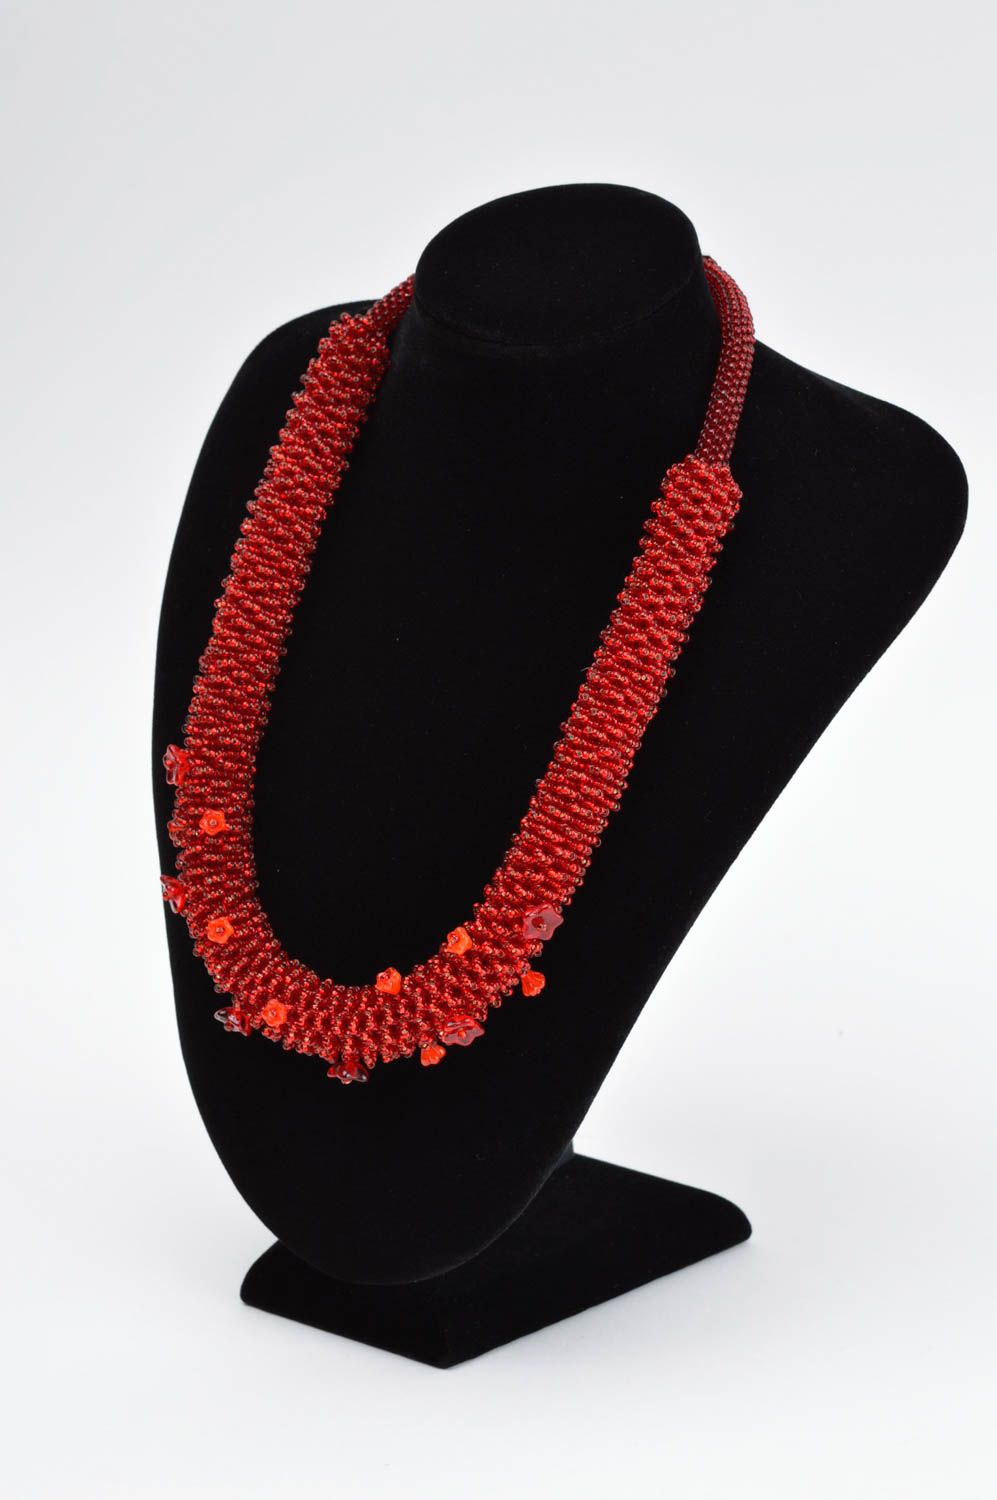 Handmade beaded cord necklace stylish designer jewelry cute accessory gift photo 1